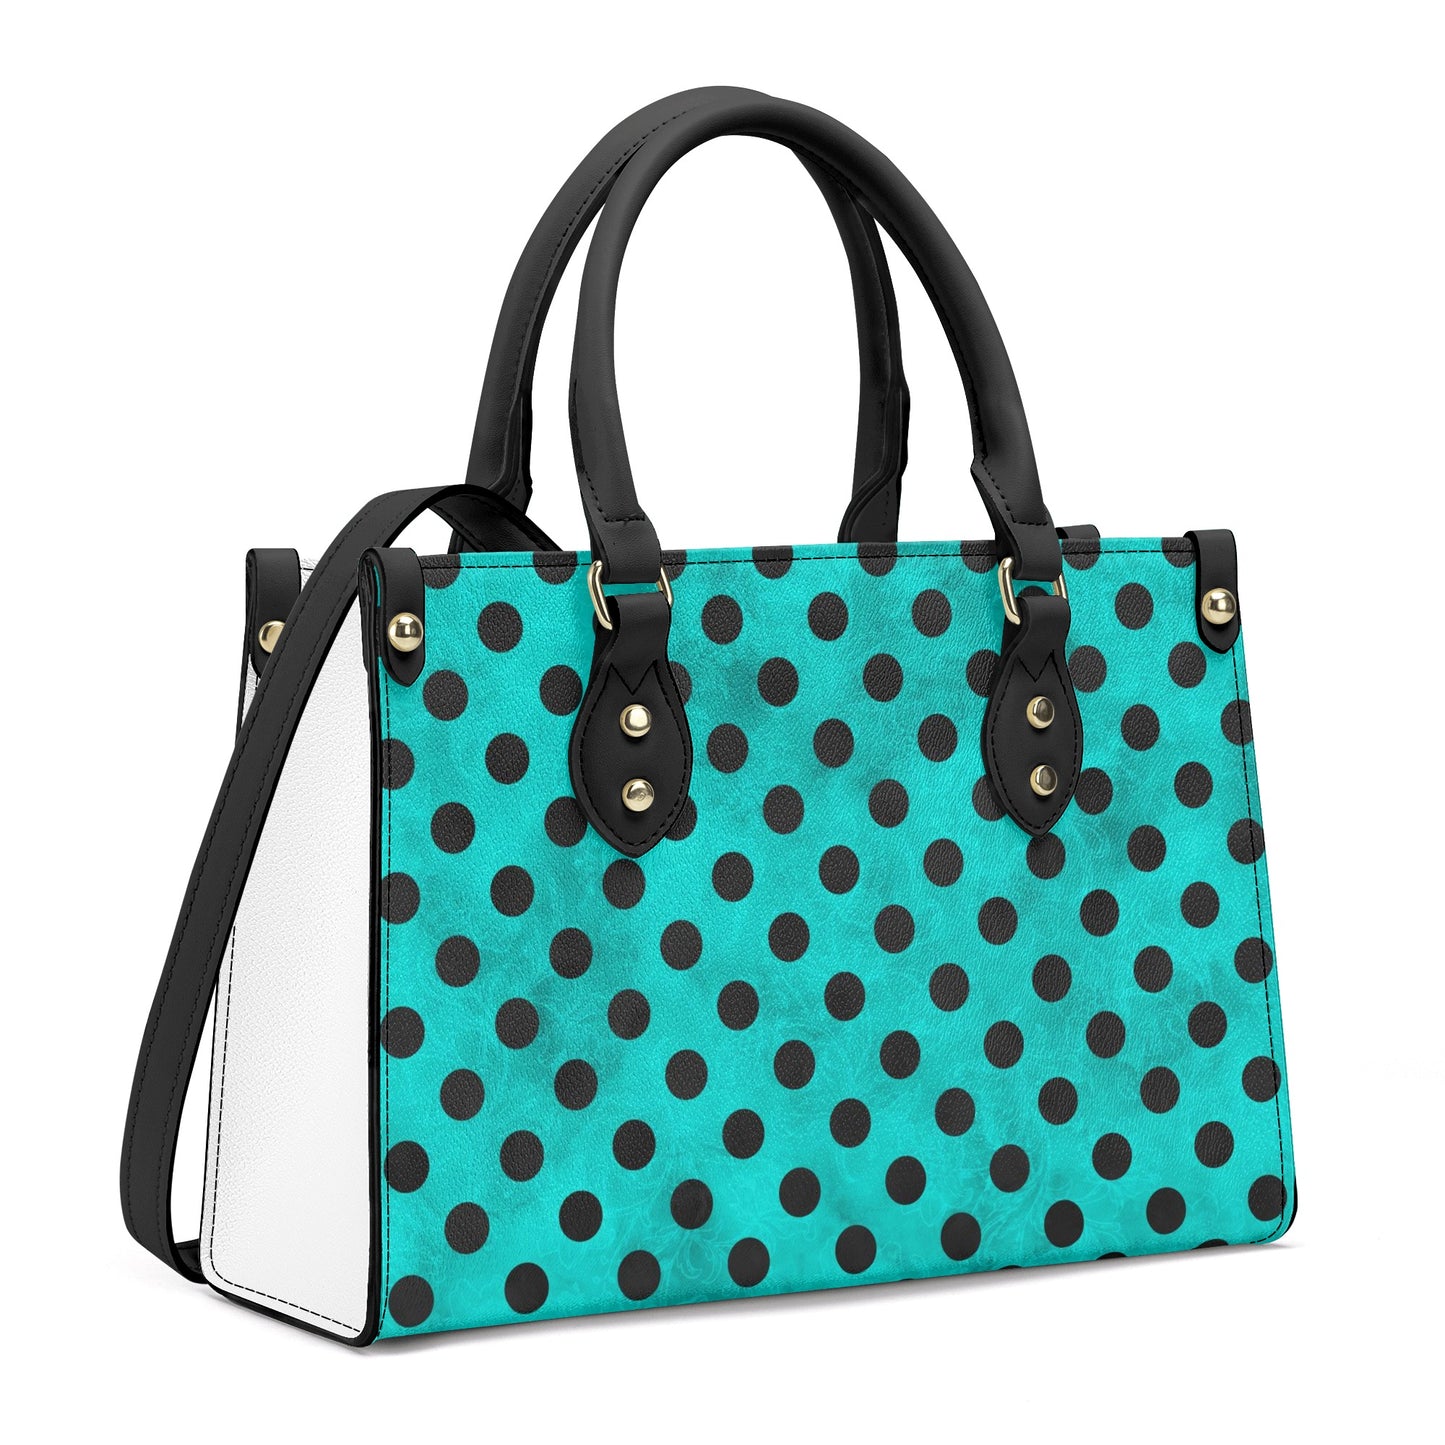 Polka Dot Top Handle Women Handbag - EvoFash 